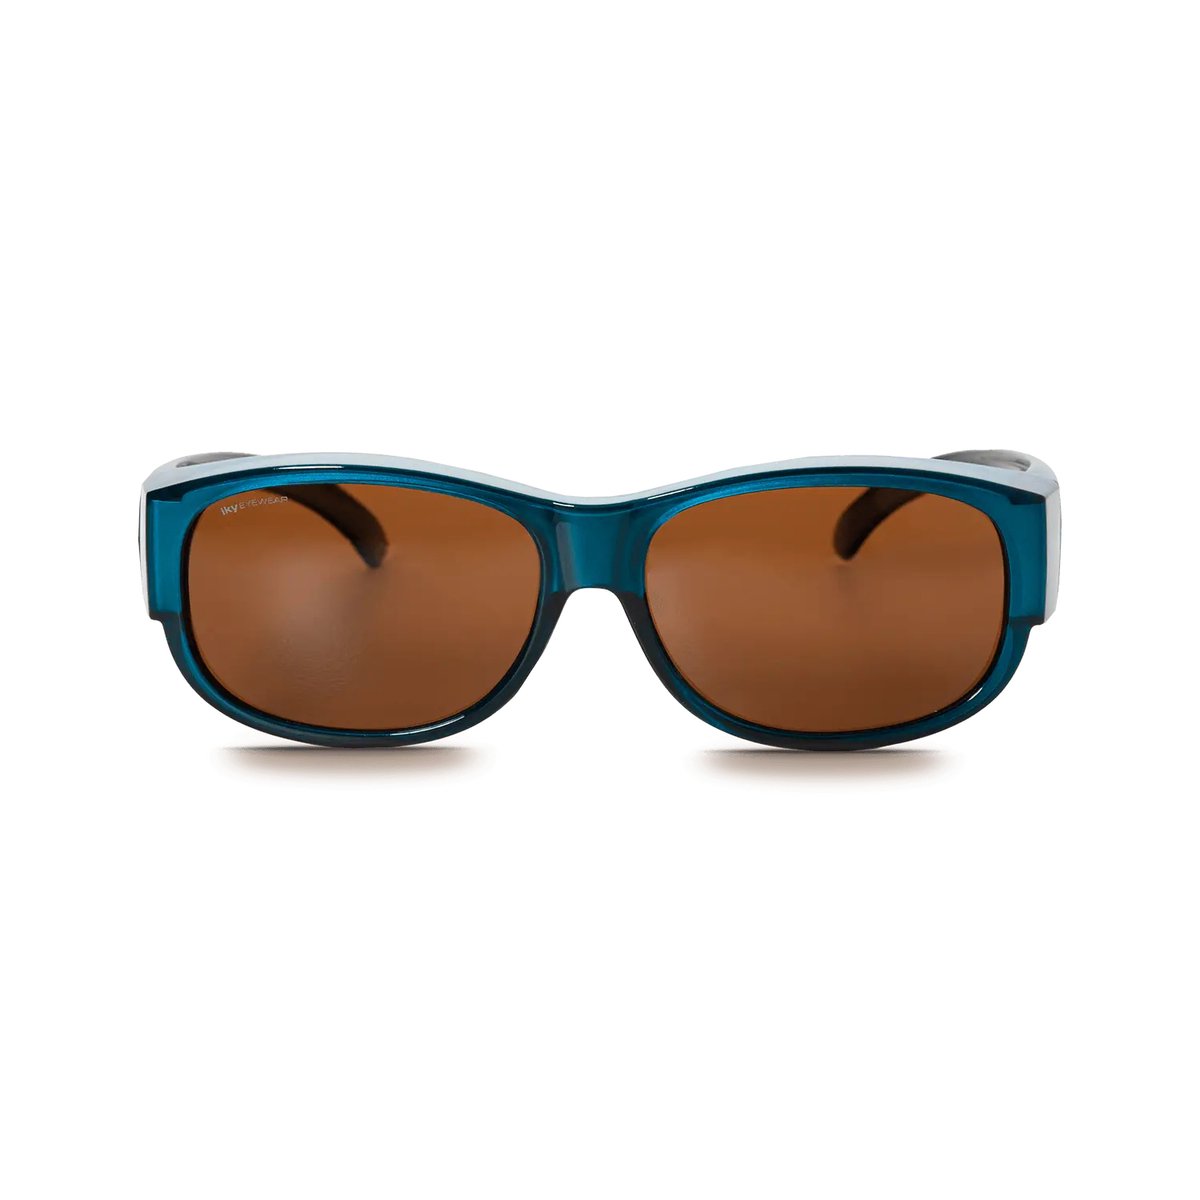 IKY EYEWEAR overzet zonnebril OB-1001D2-blauw-metallic